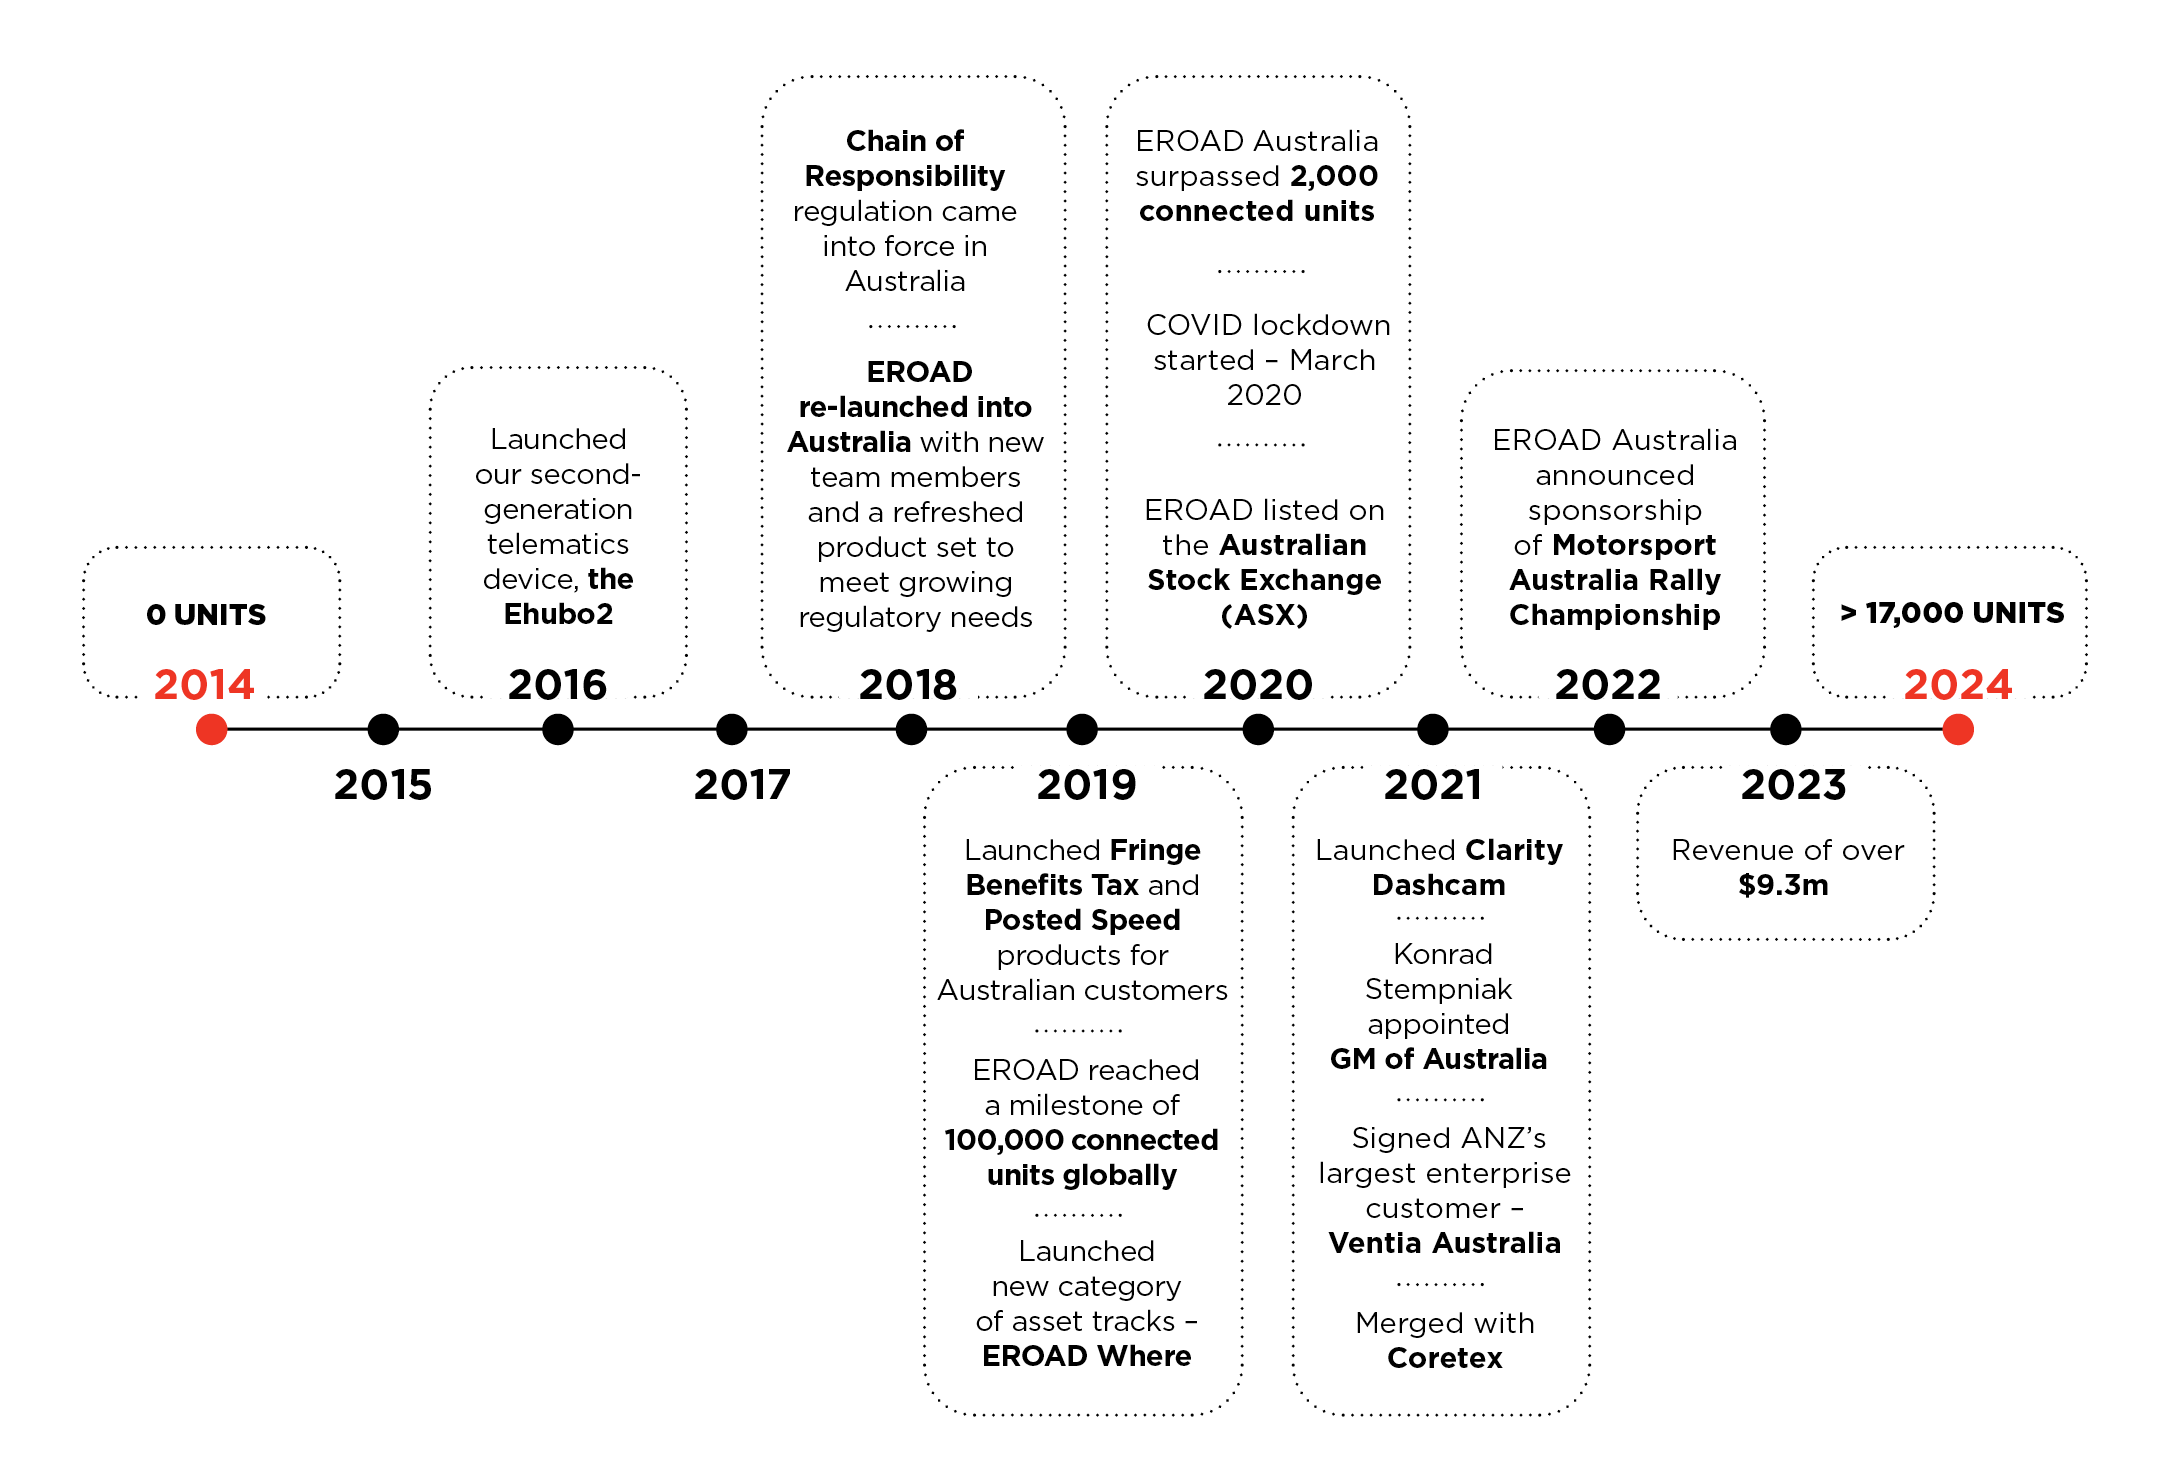 Timeline of key milestone for EROAD in Australia since 2914